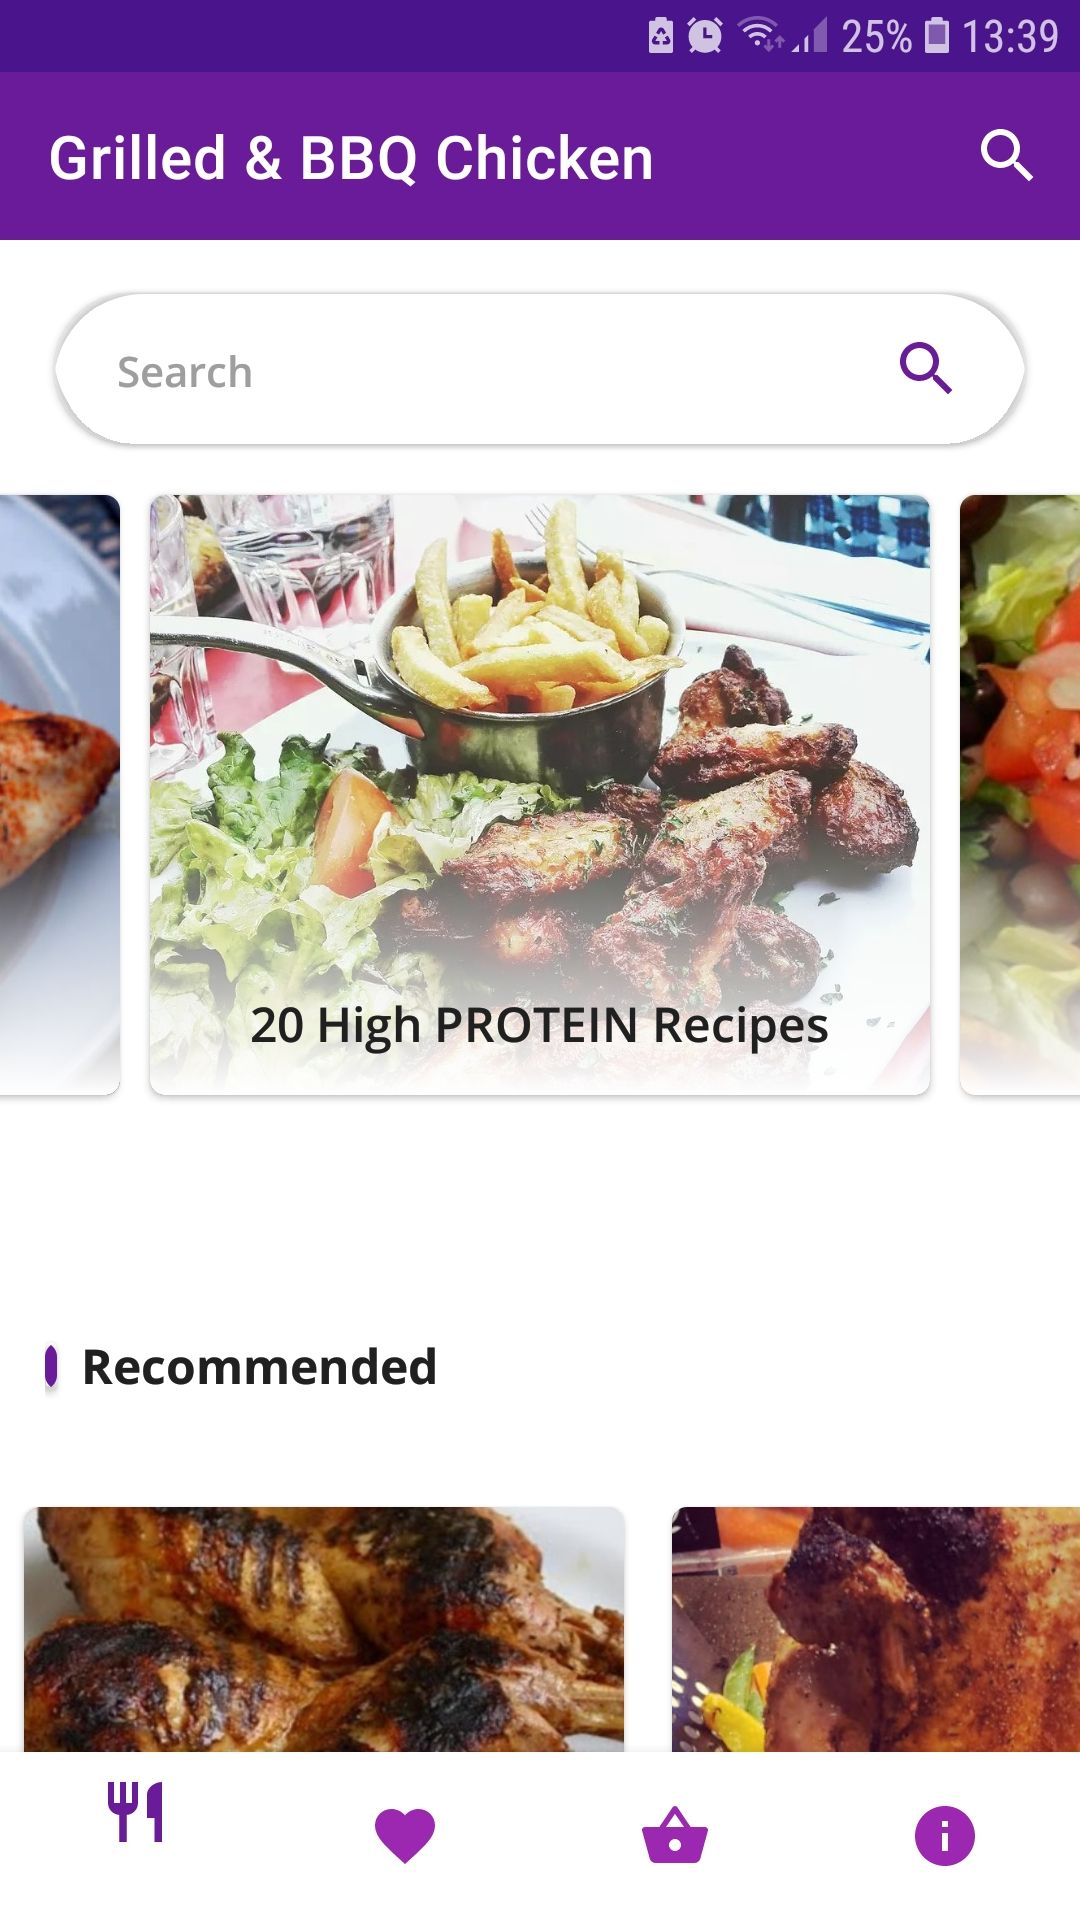 BBQ Chicken Recipes mobile recipe app